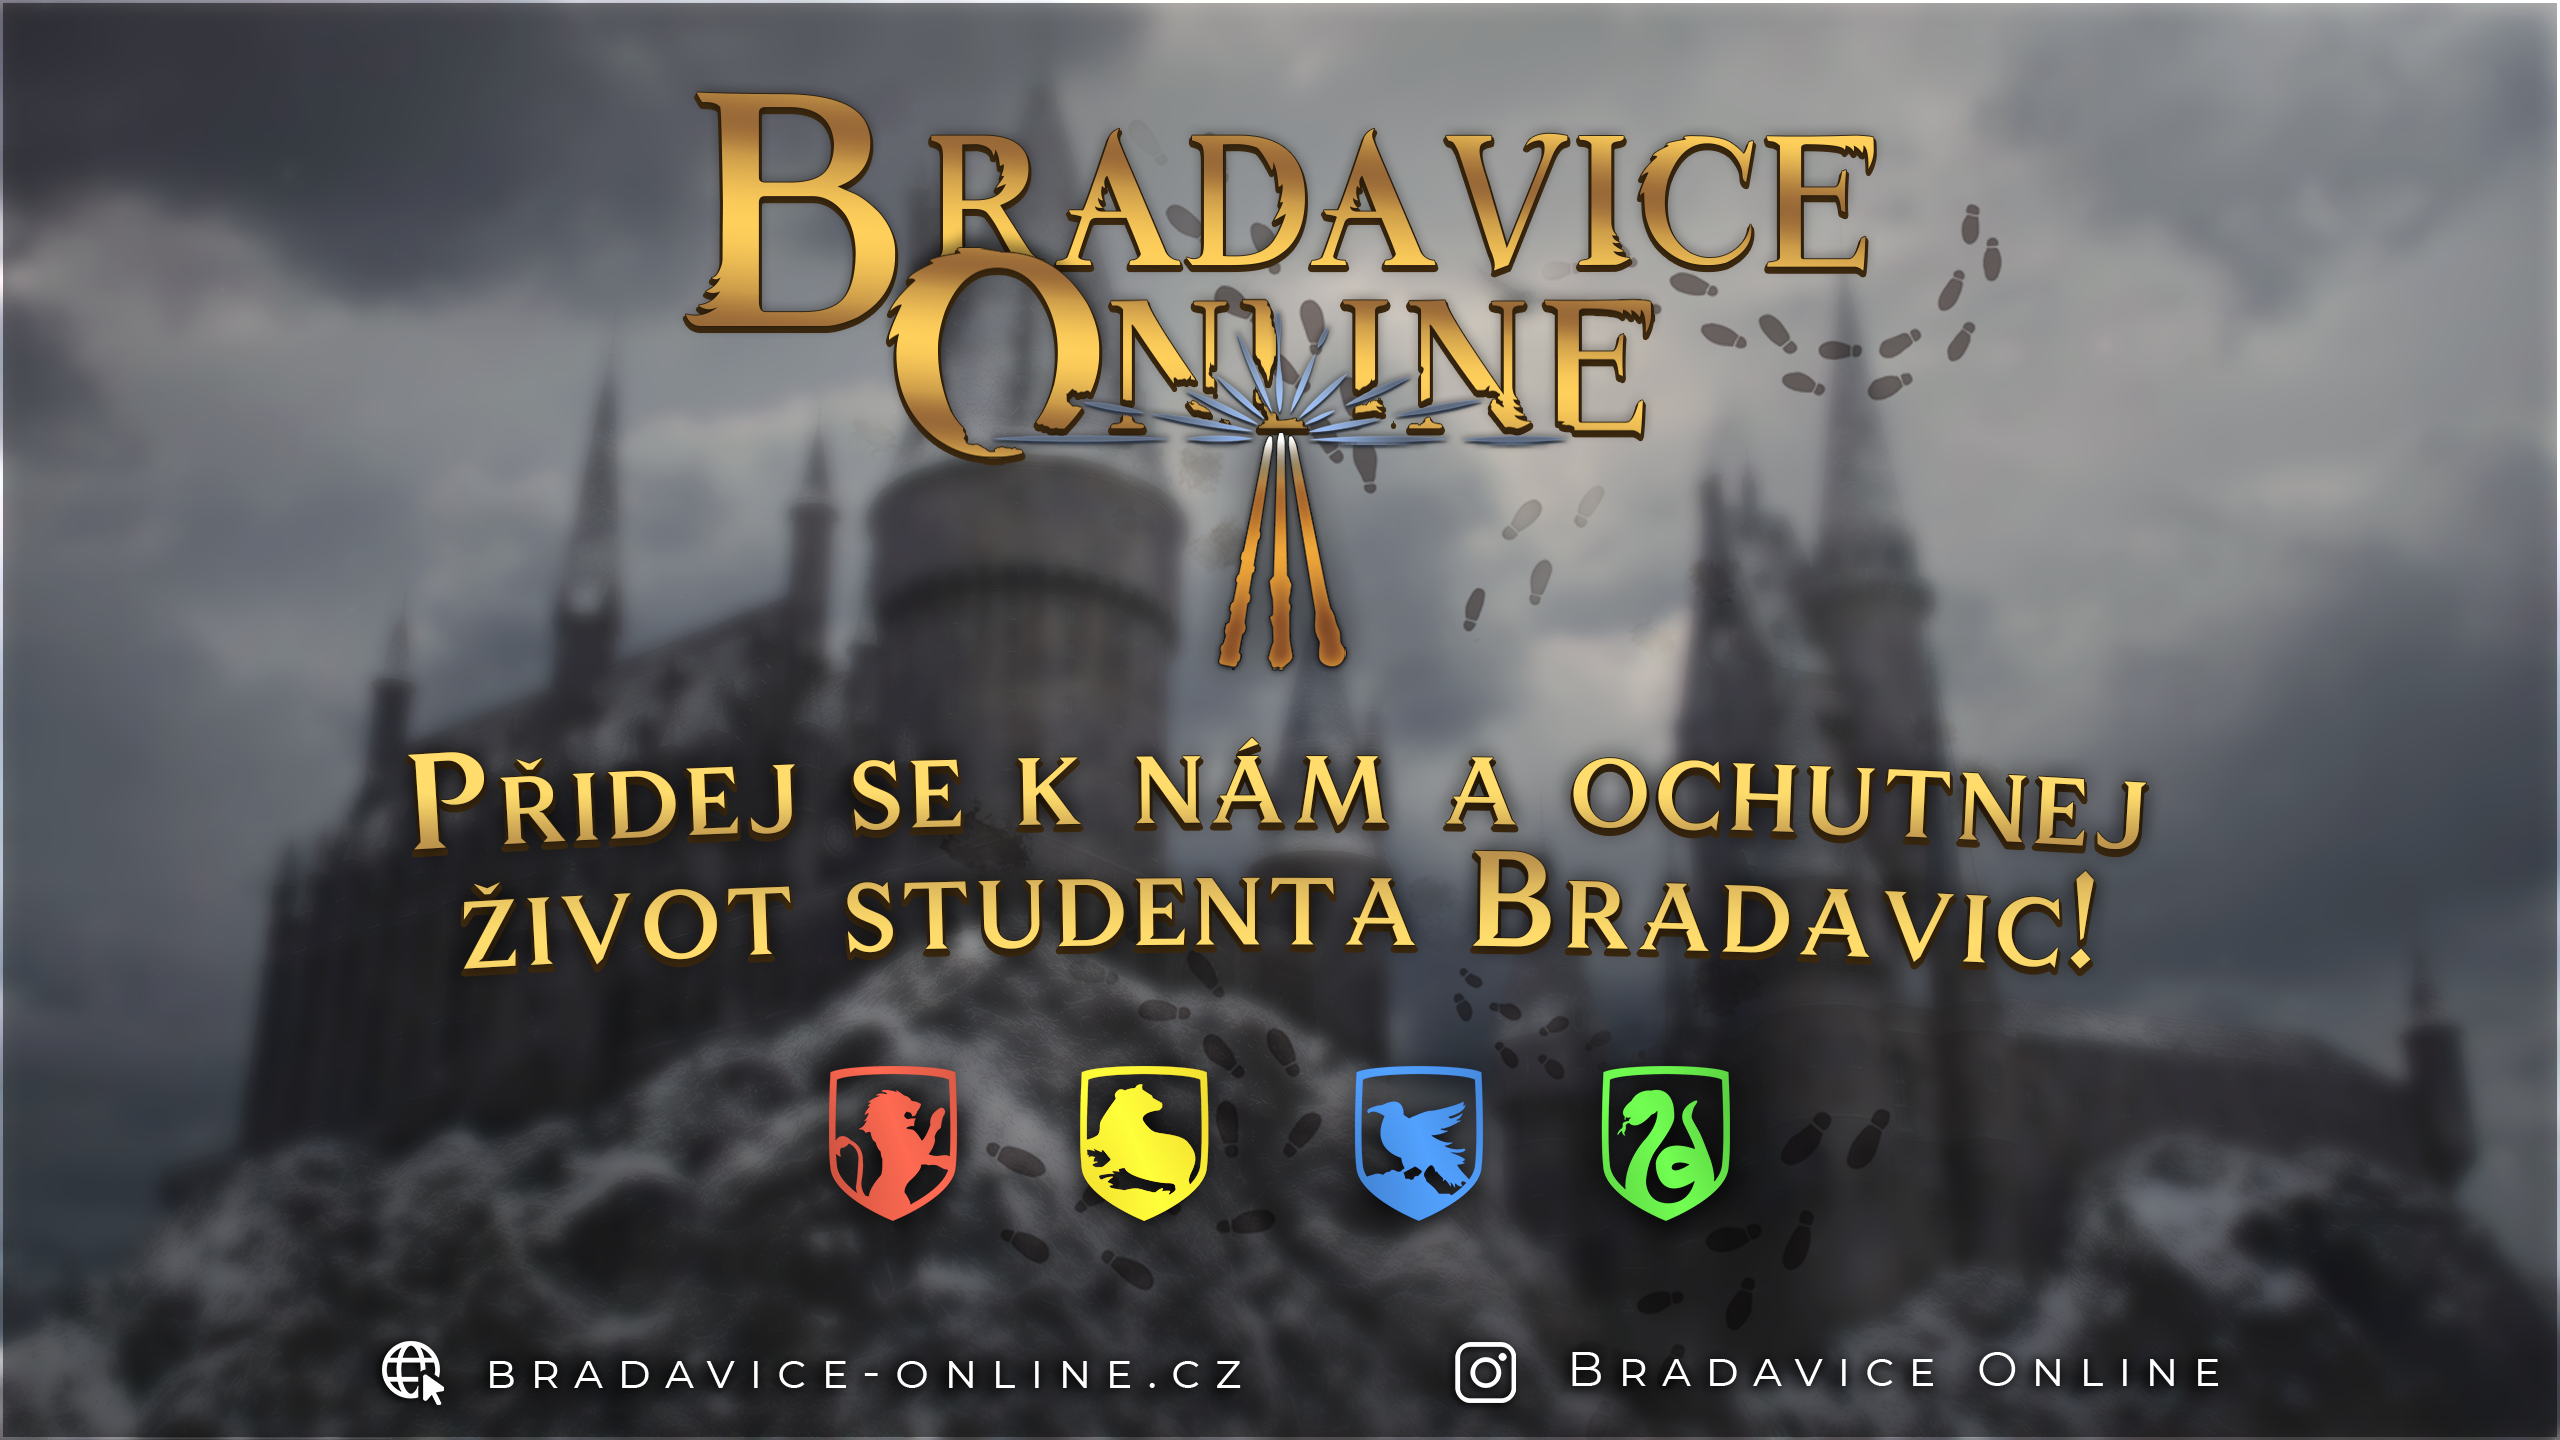 Bradavice Online